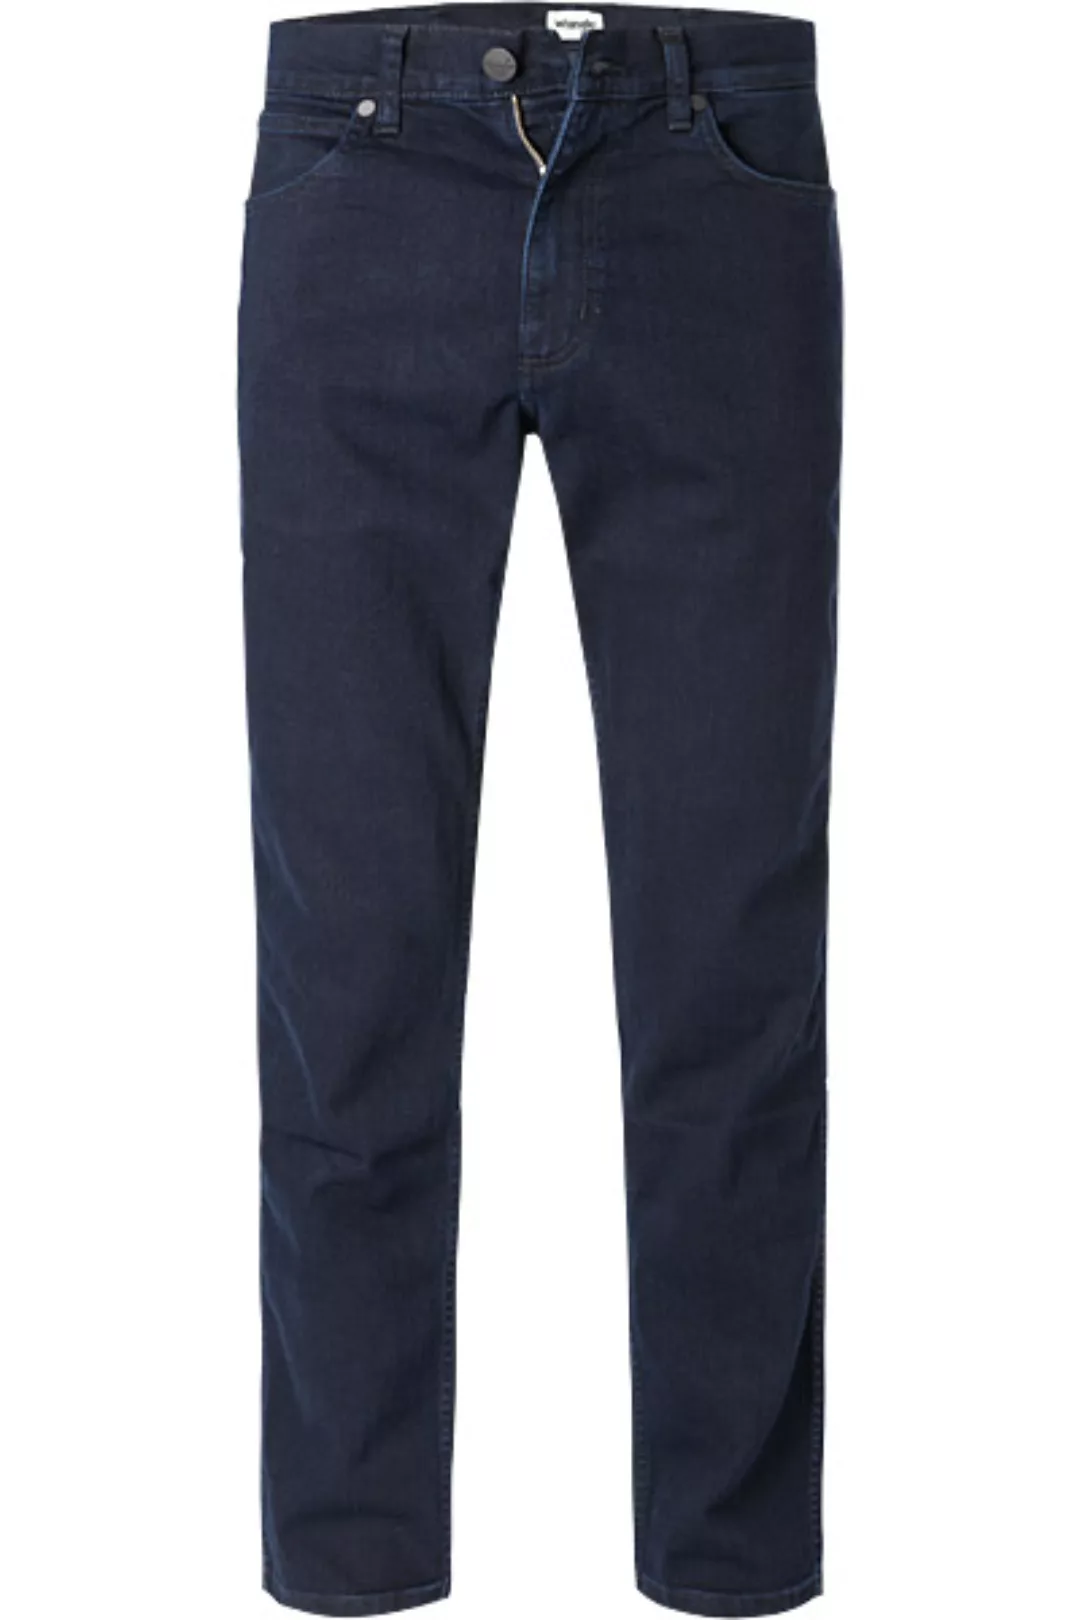 Wrangler Jeans Greensboro black back W15QQC77D günstig online kaufen